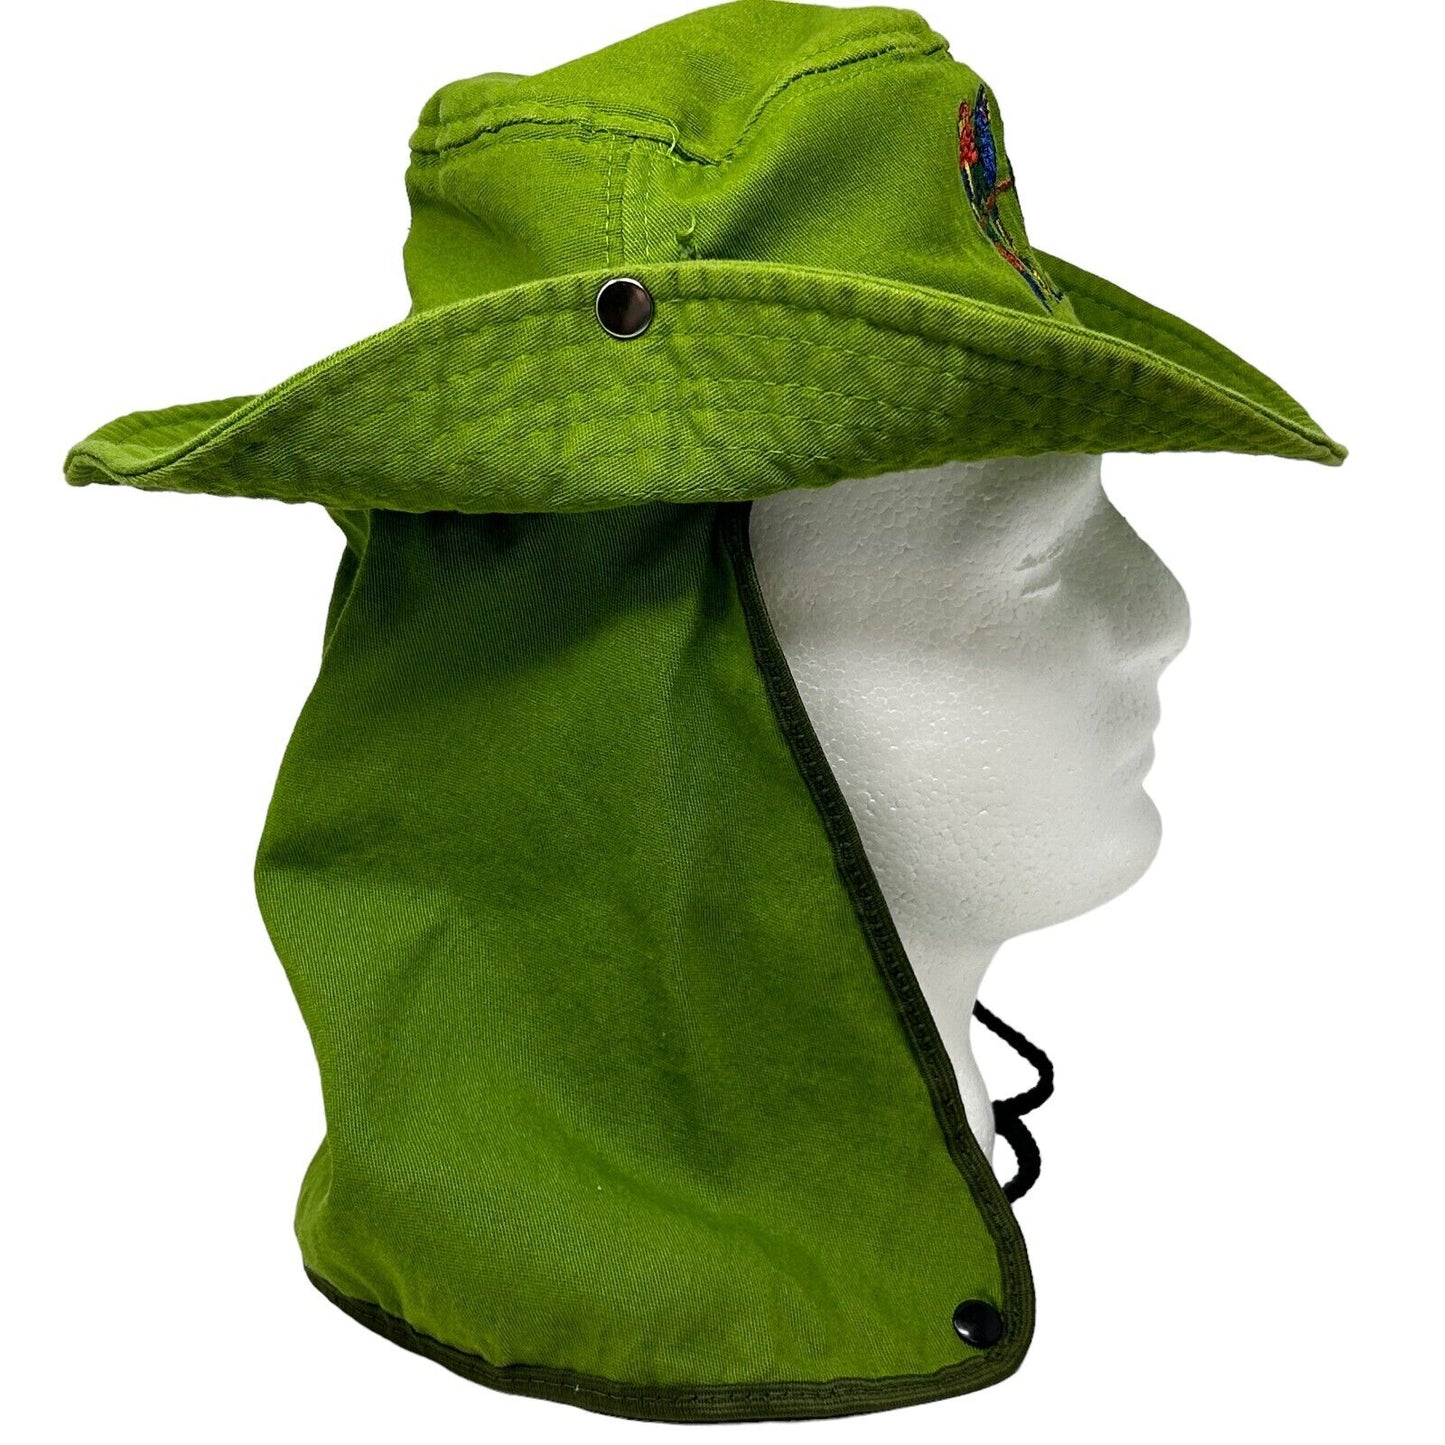 Manaus Amazonas Bush Boonie Hat With Neck Cover Flap Green Amazon Brazil